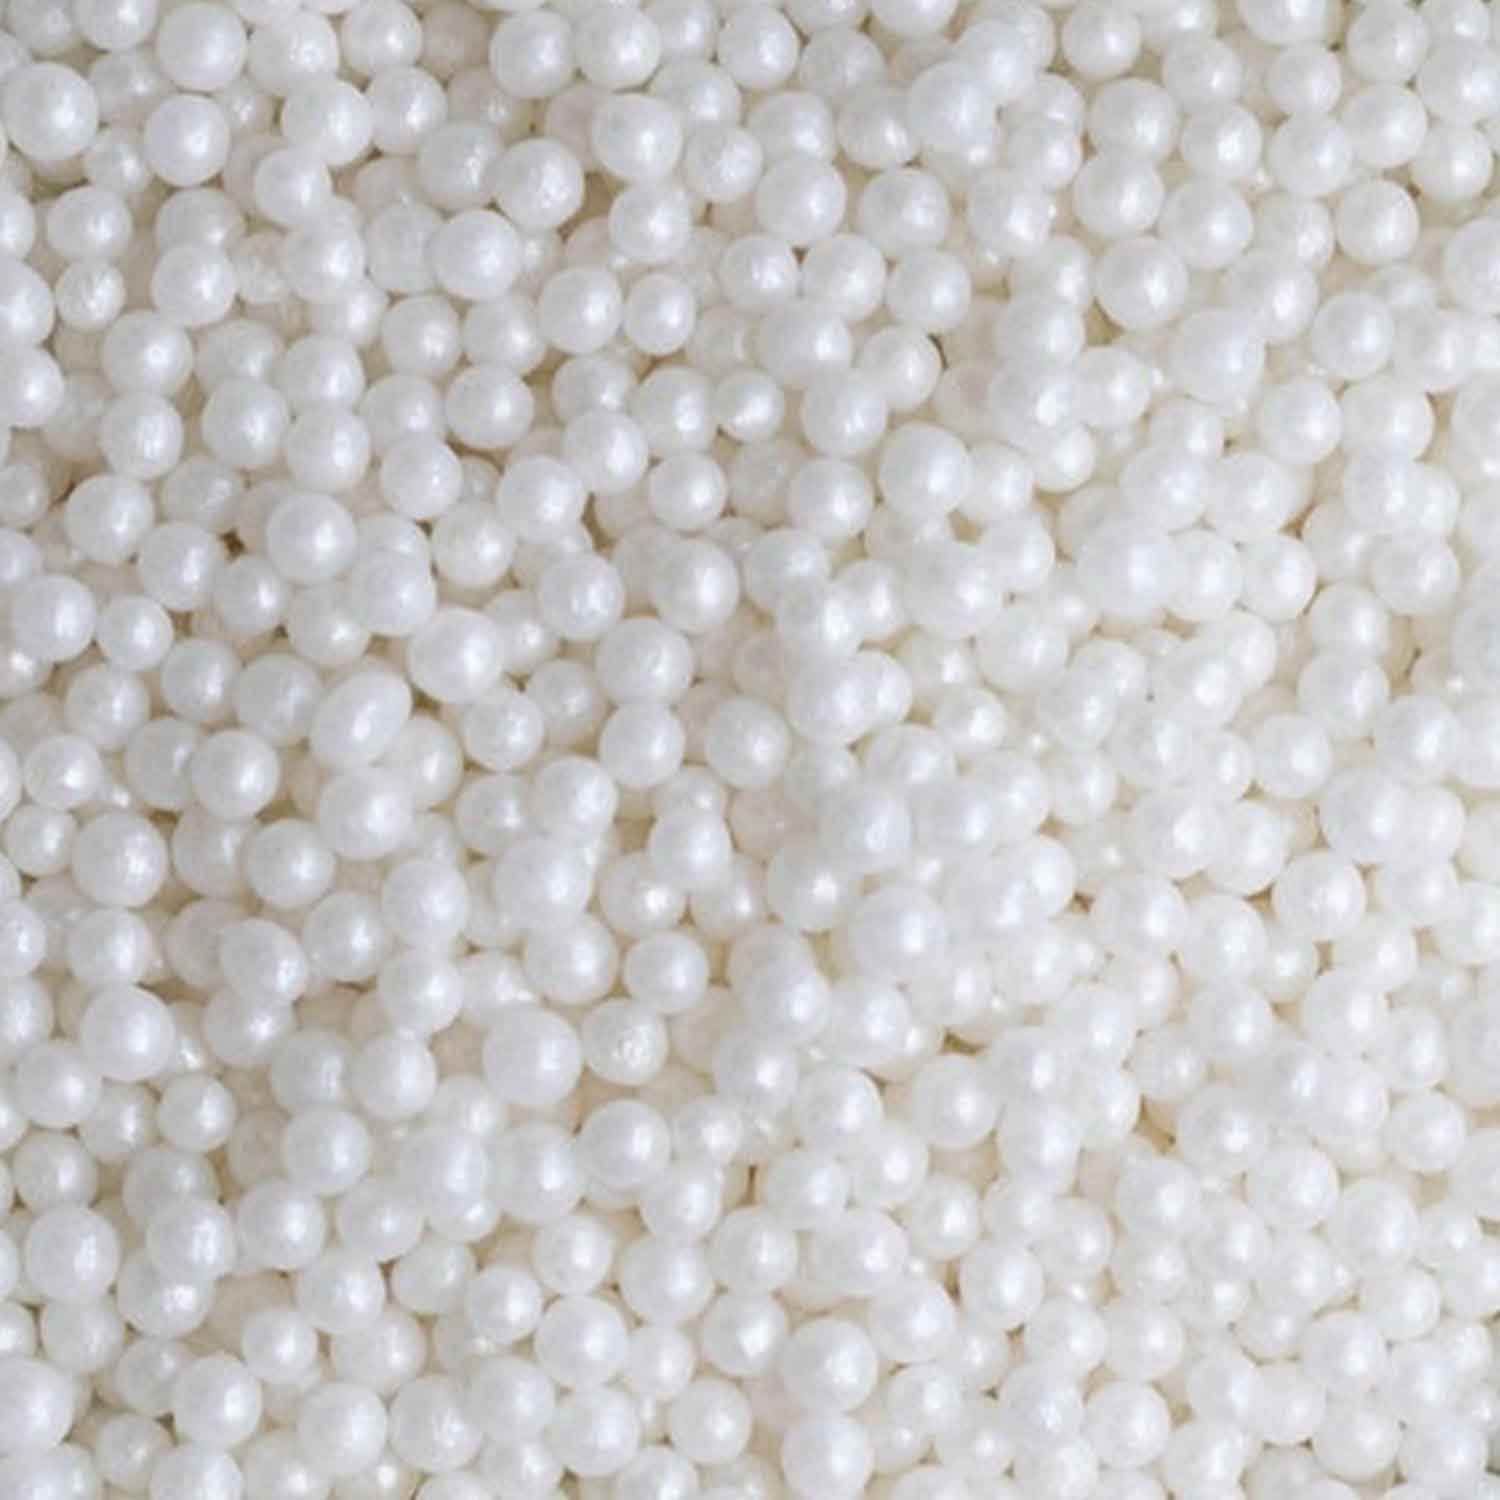 4mm Sugar Pearls - White